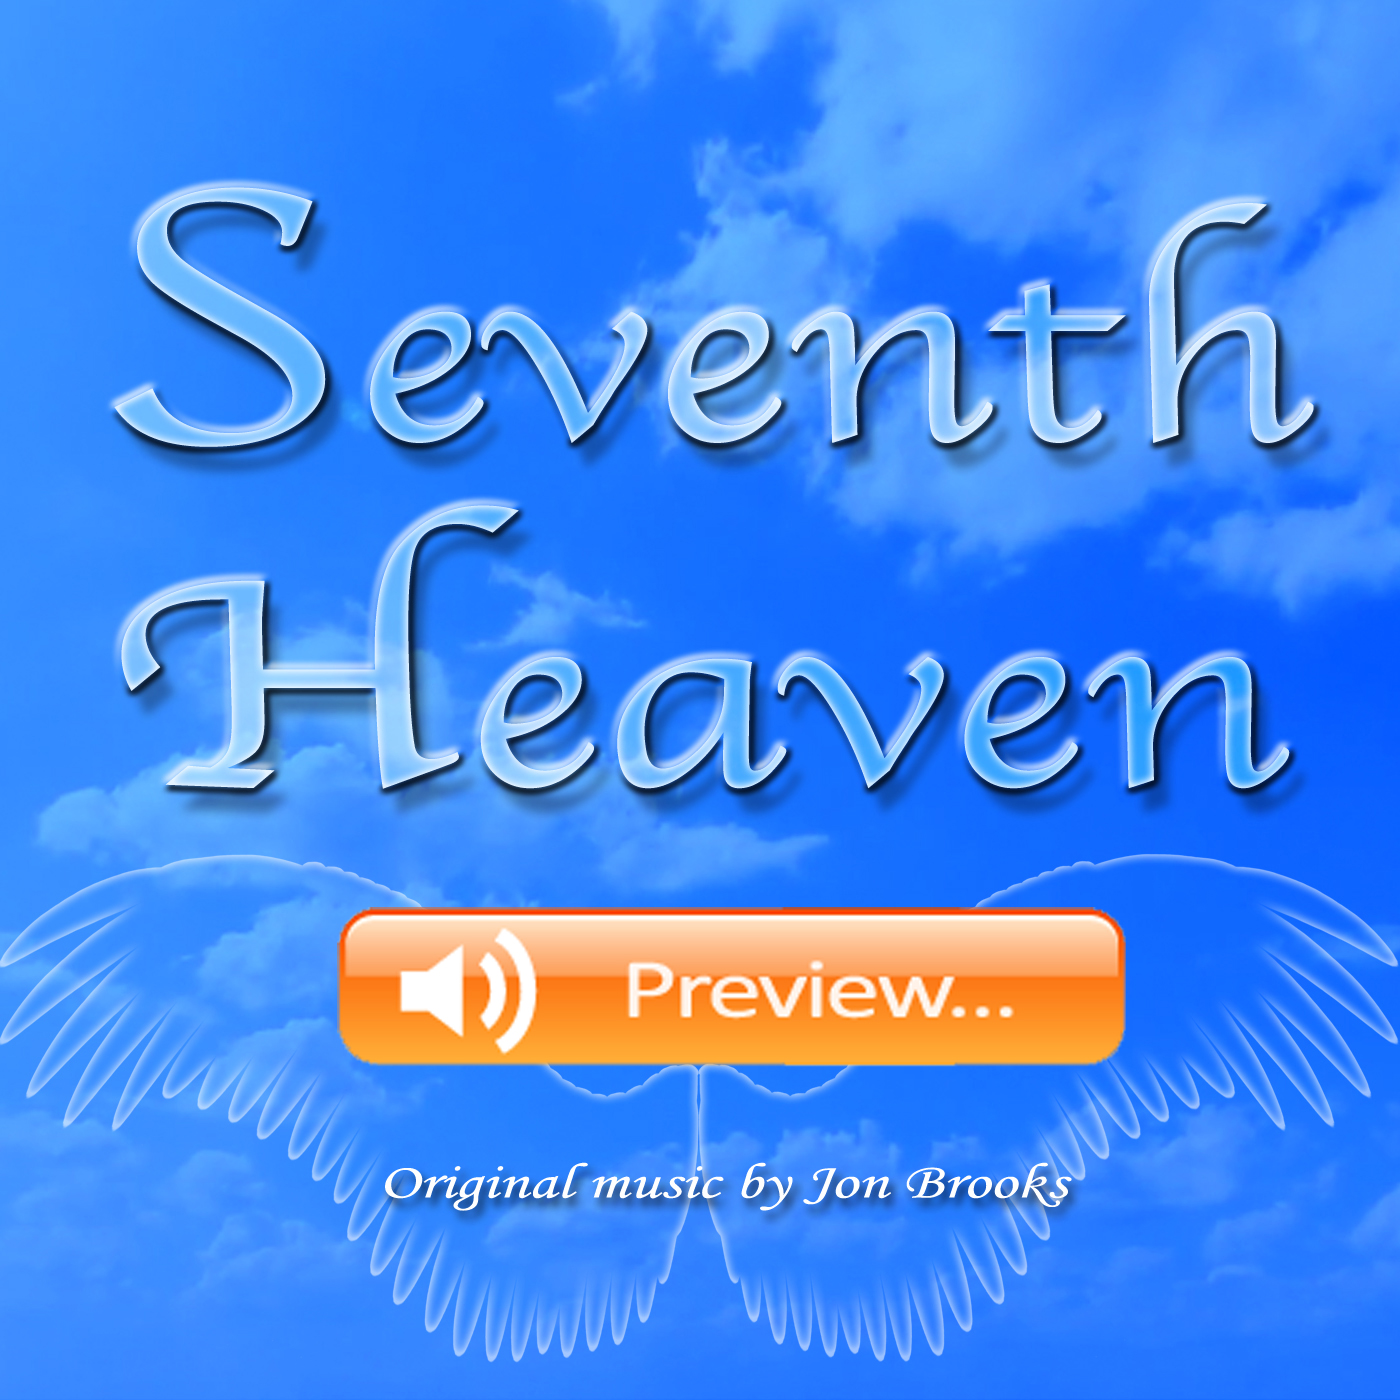 Seventh Heaven Mp3 - Original Music Track By Jon Brooks